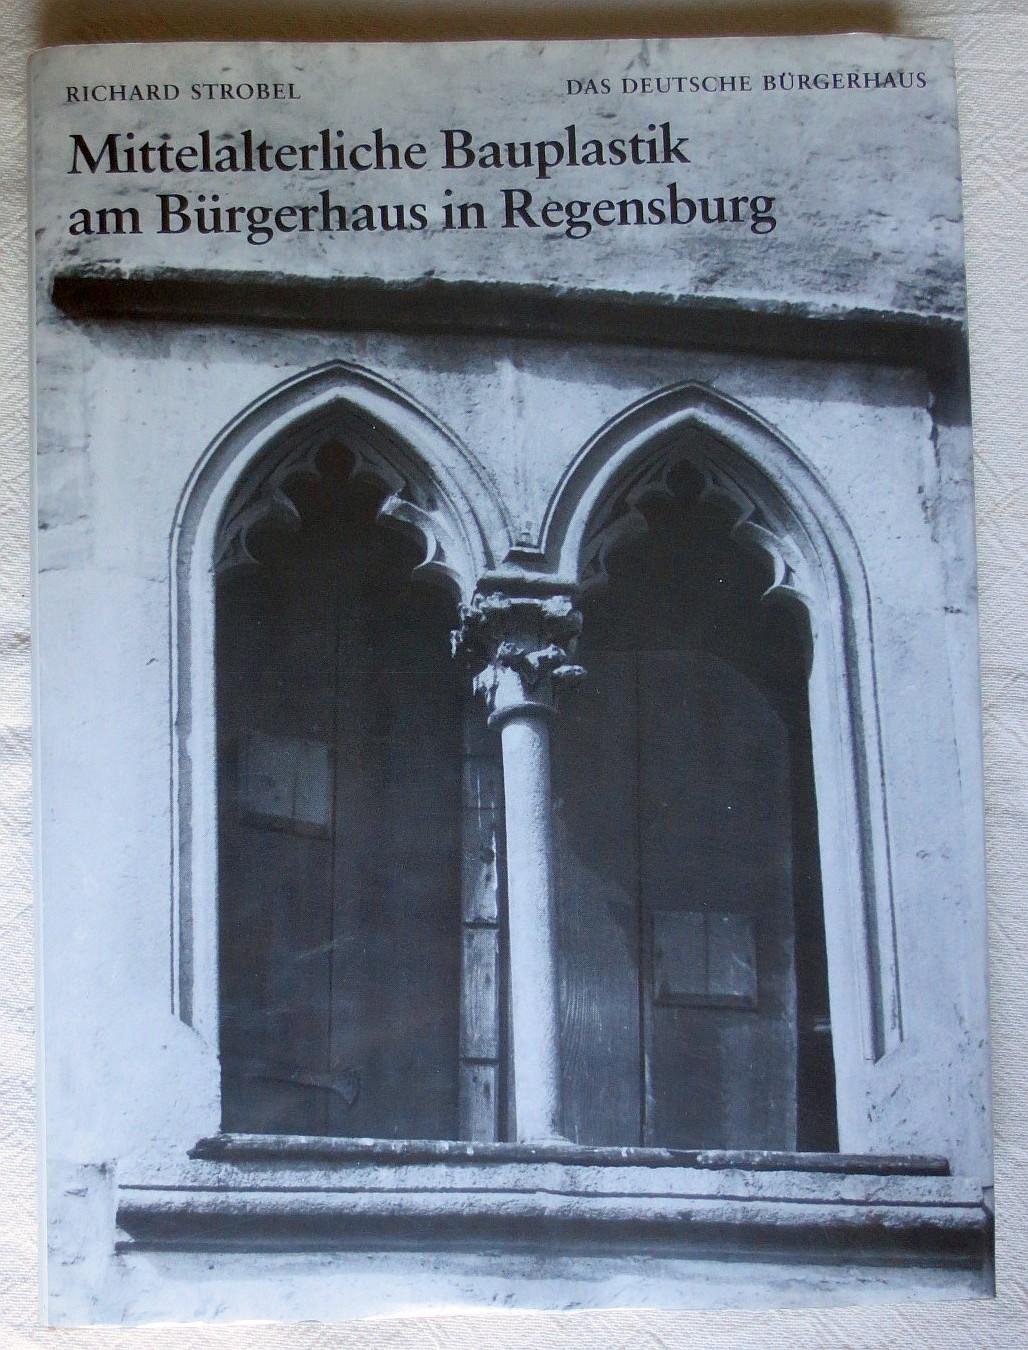 Burgerhaus Regensburg